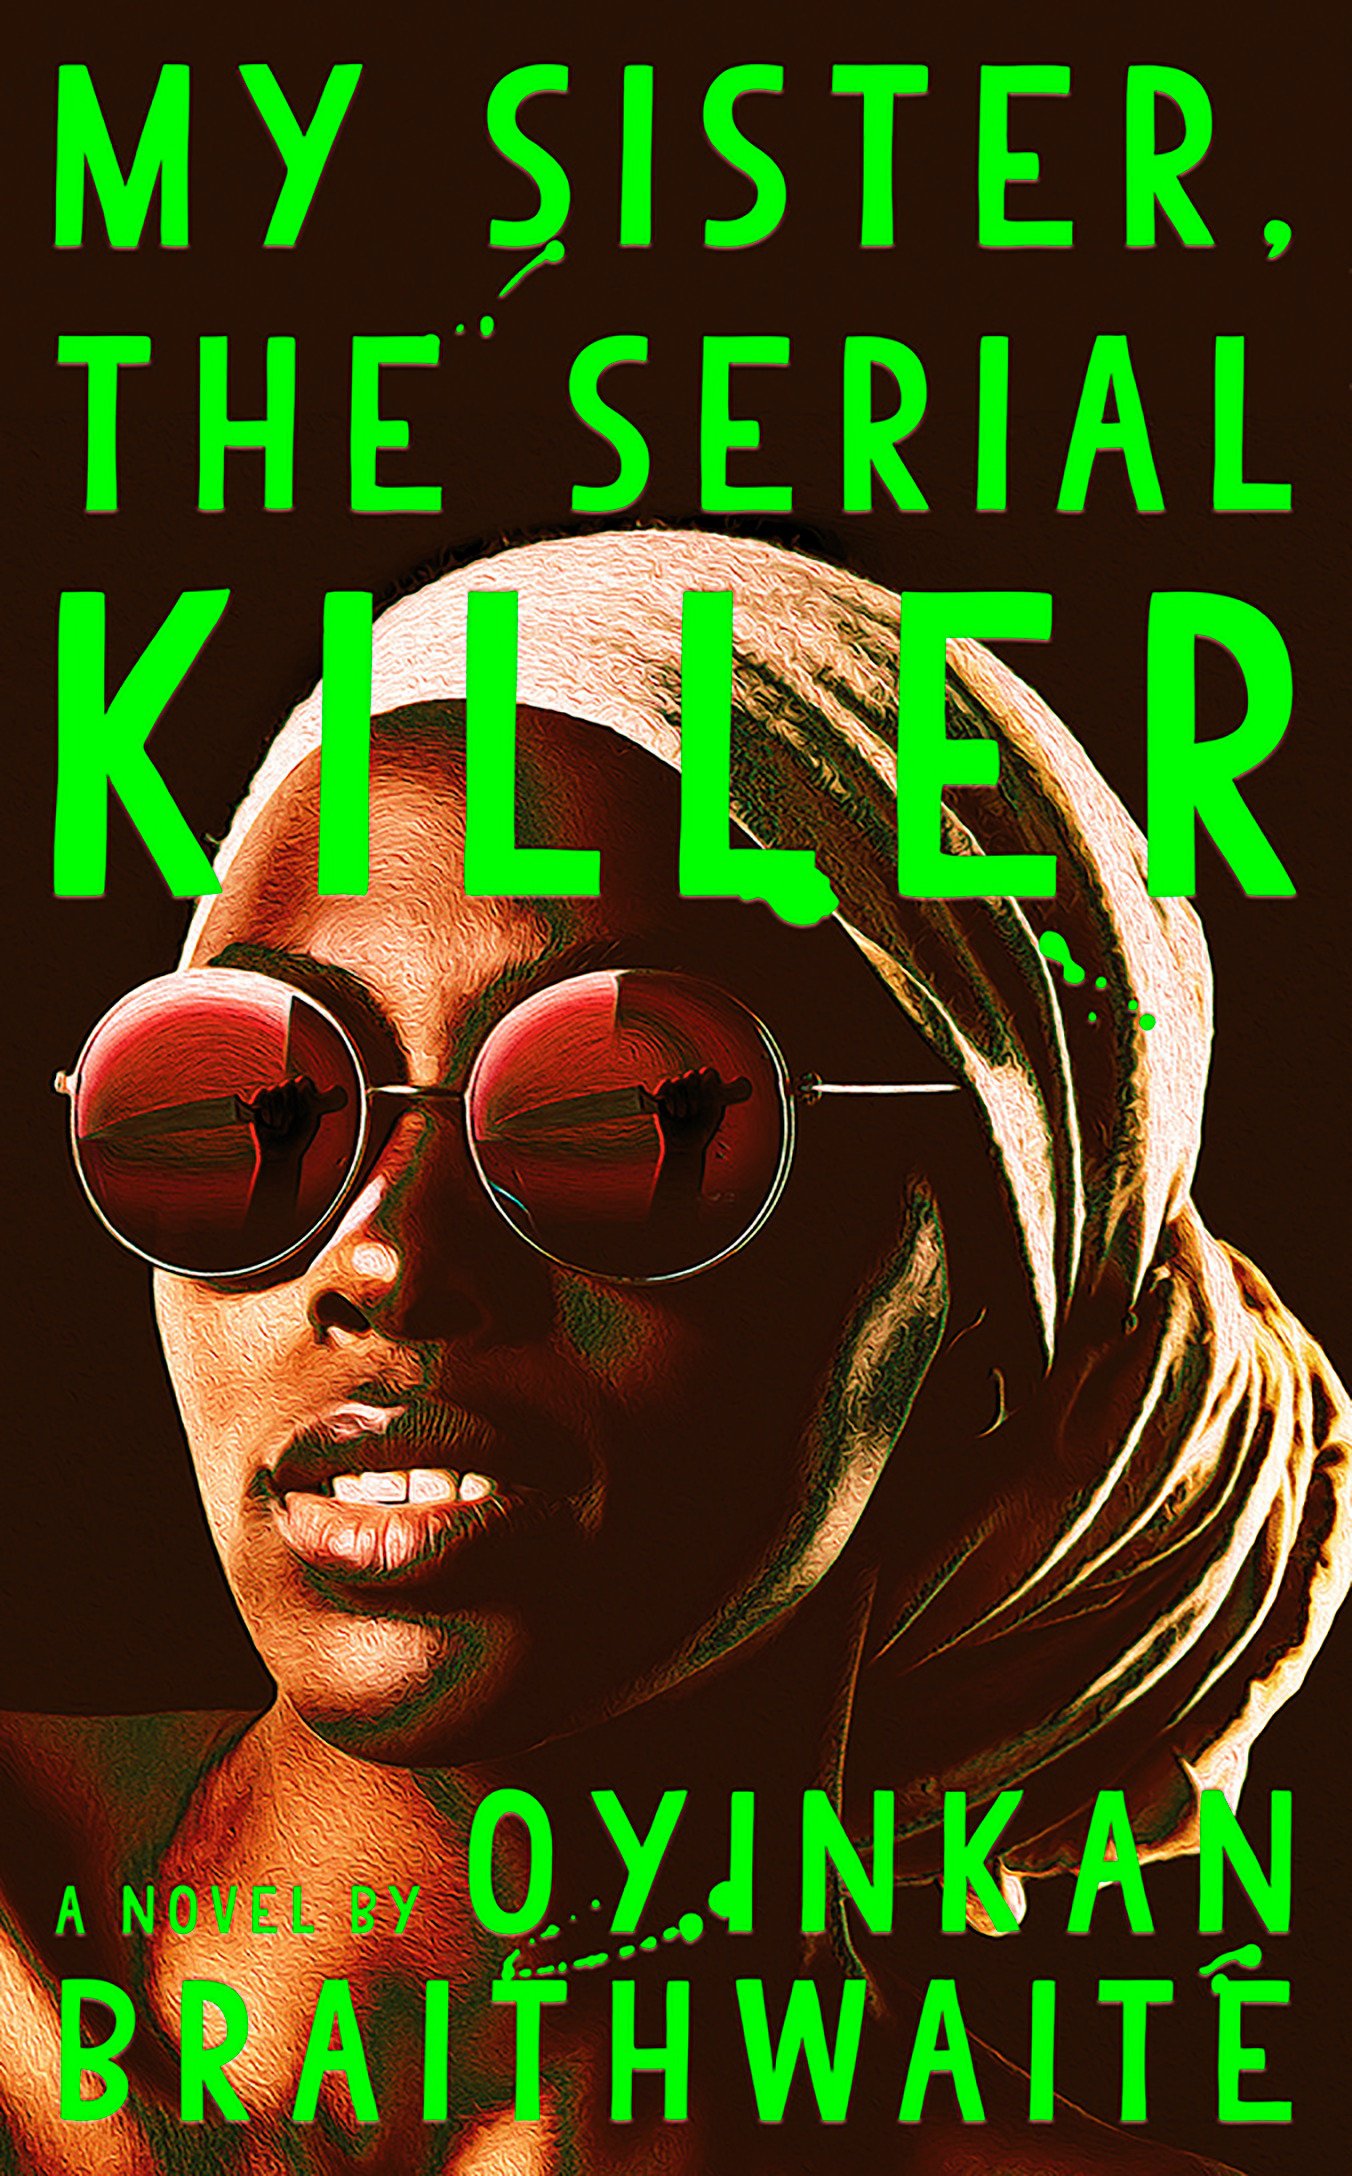 Book Review: “My Sister, The Serial Killer” by Oyinkan Braithwaite